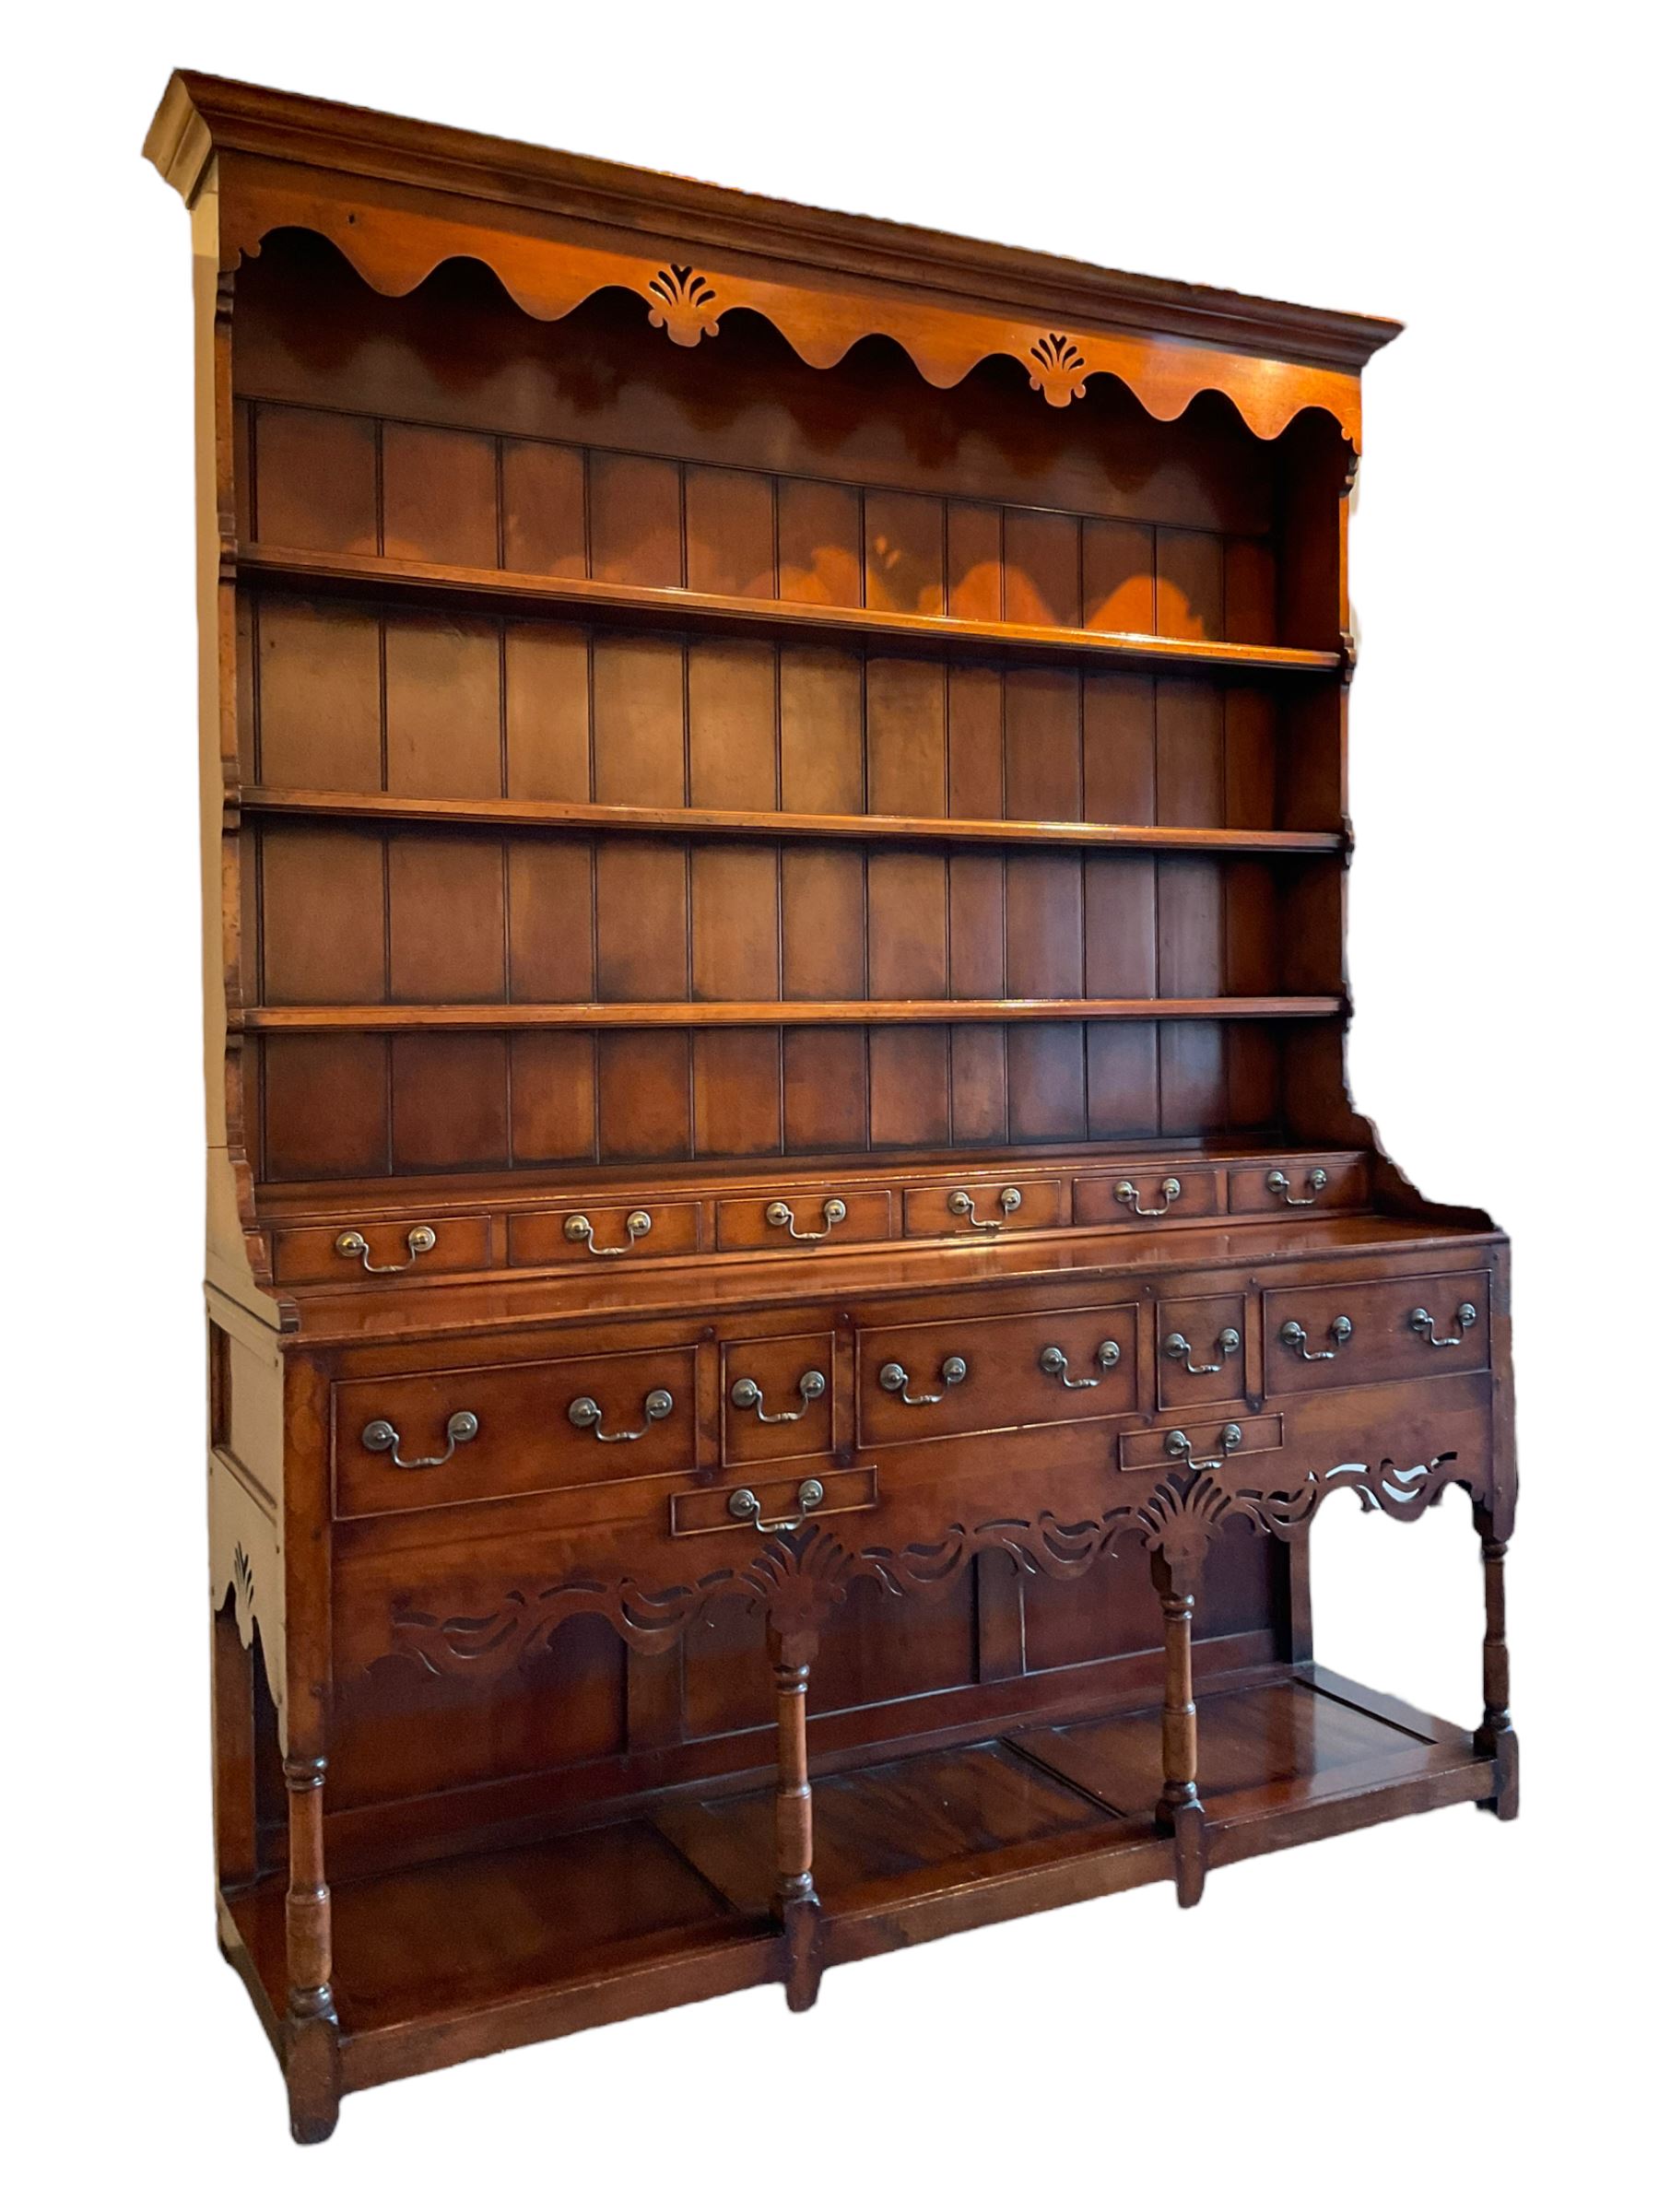 George III design cherry wood dresser - Image 2 of 8